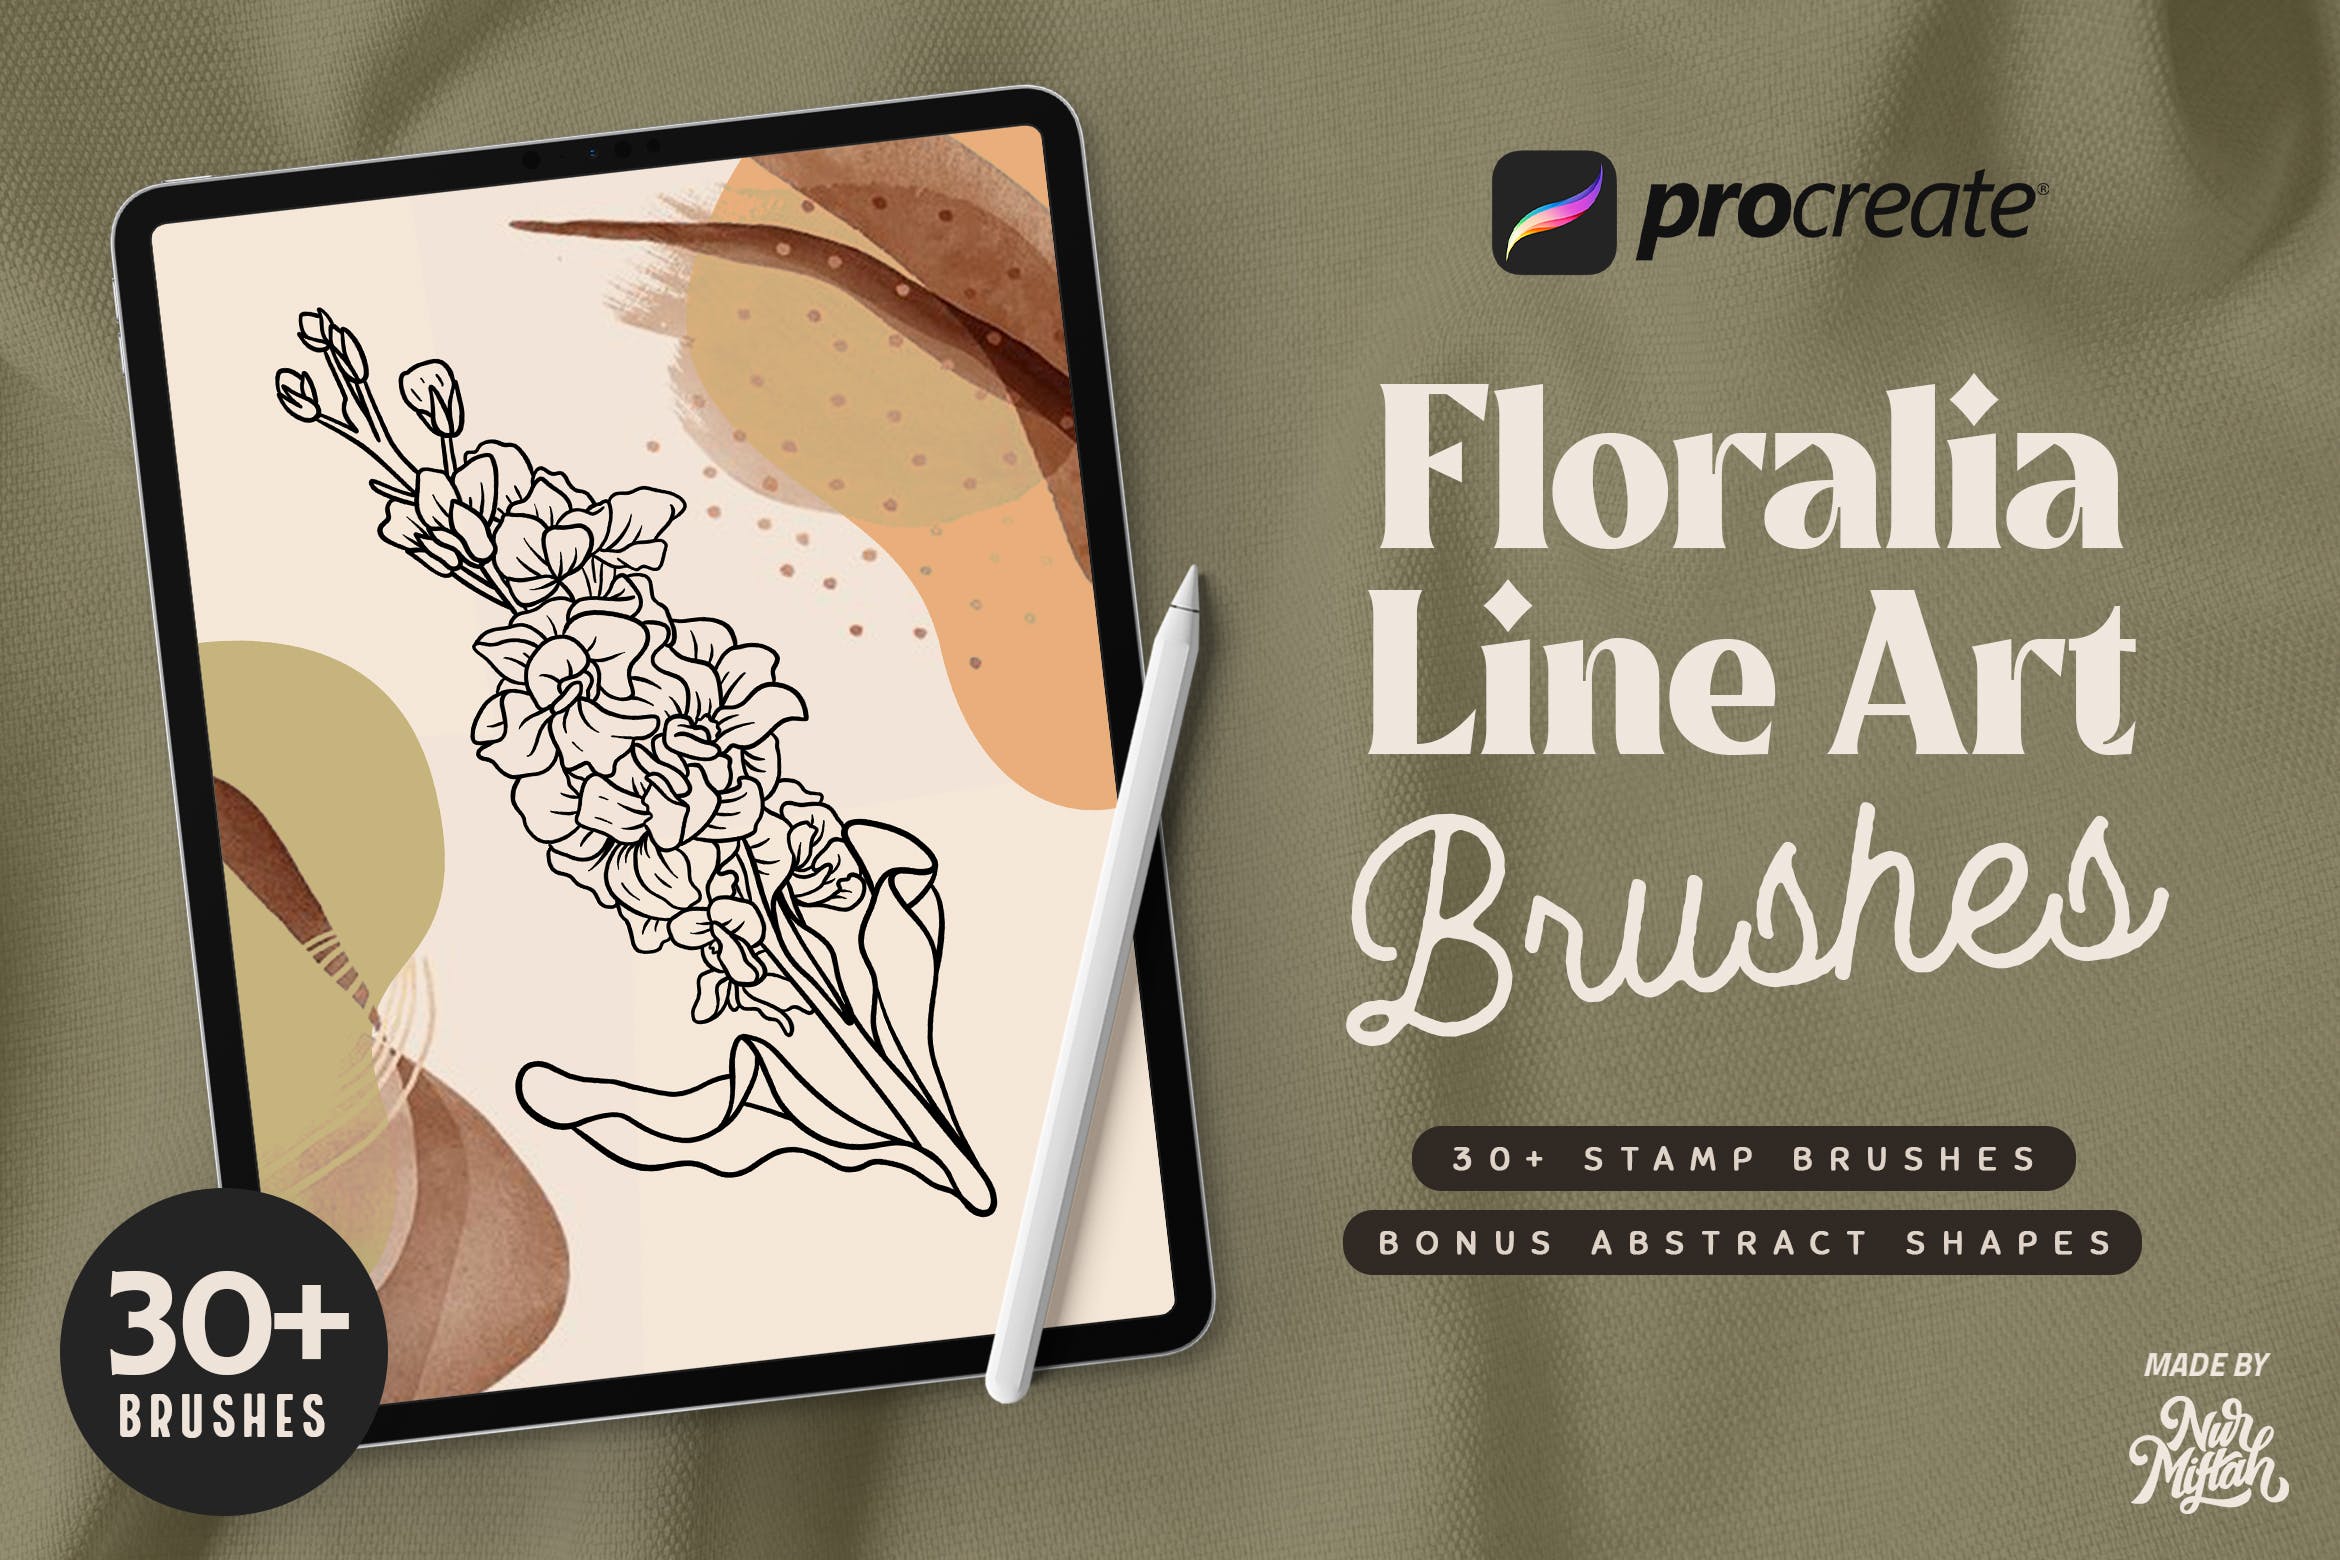 Procreate花卉线条艺术笔刷 Procreate Floralia Line Art Brushes 笔刷资源 第1张